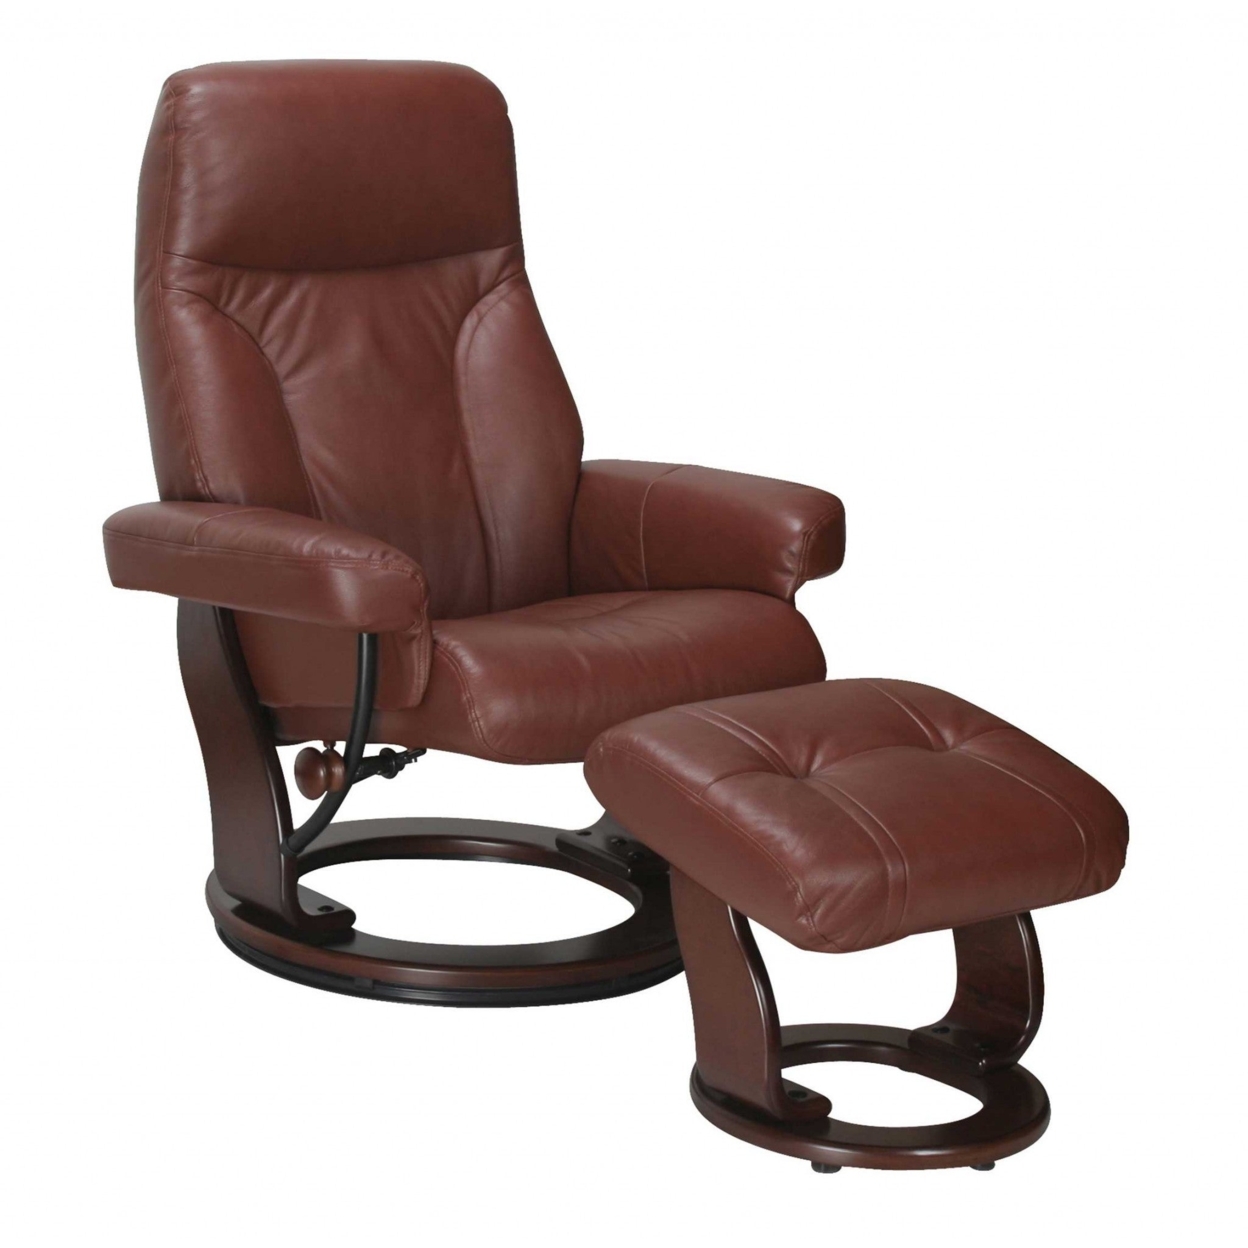 32" x 32" x 40" Cognac Cover- Leather & Vinyl match Chair & Ottoman